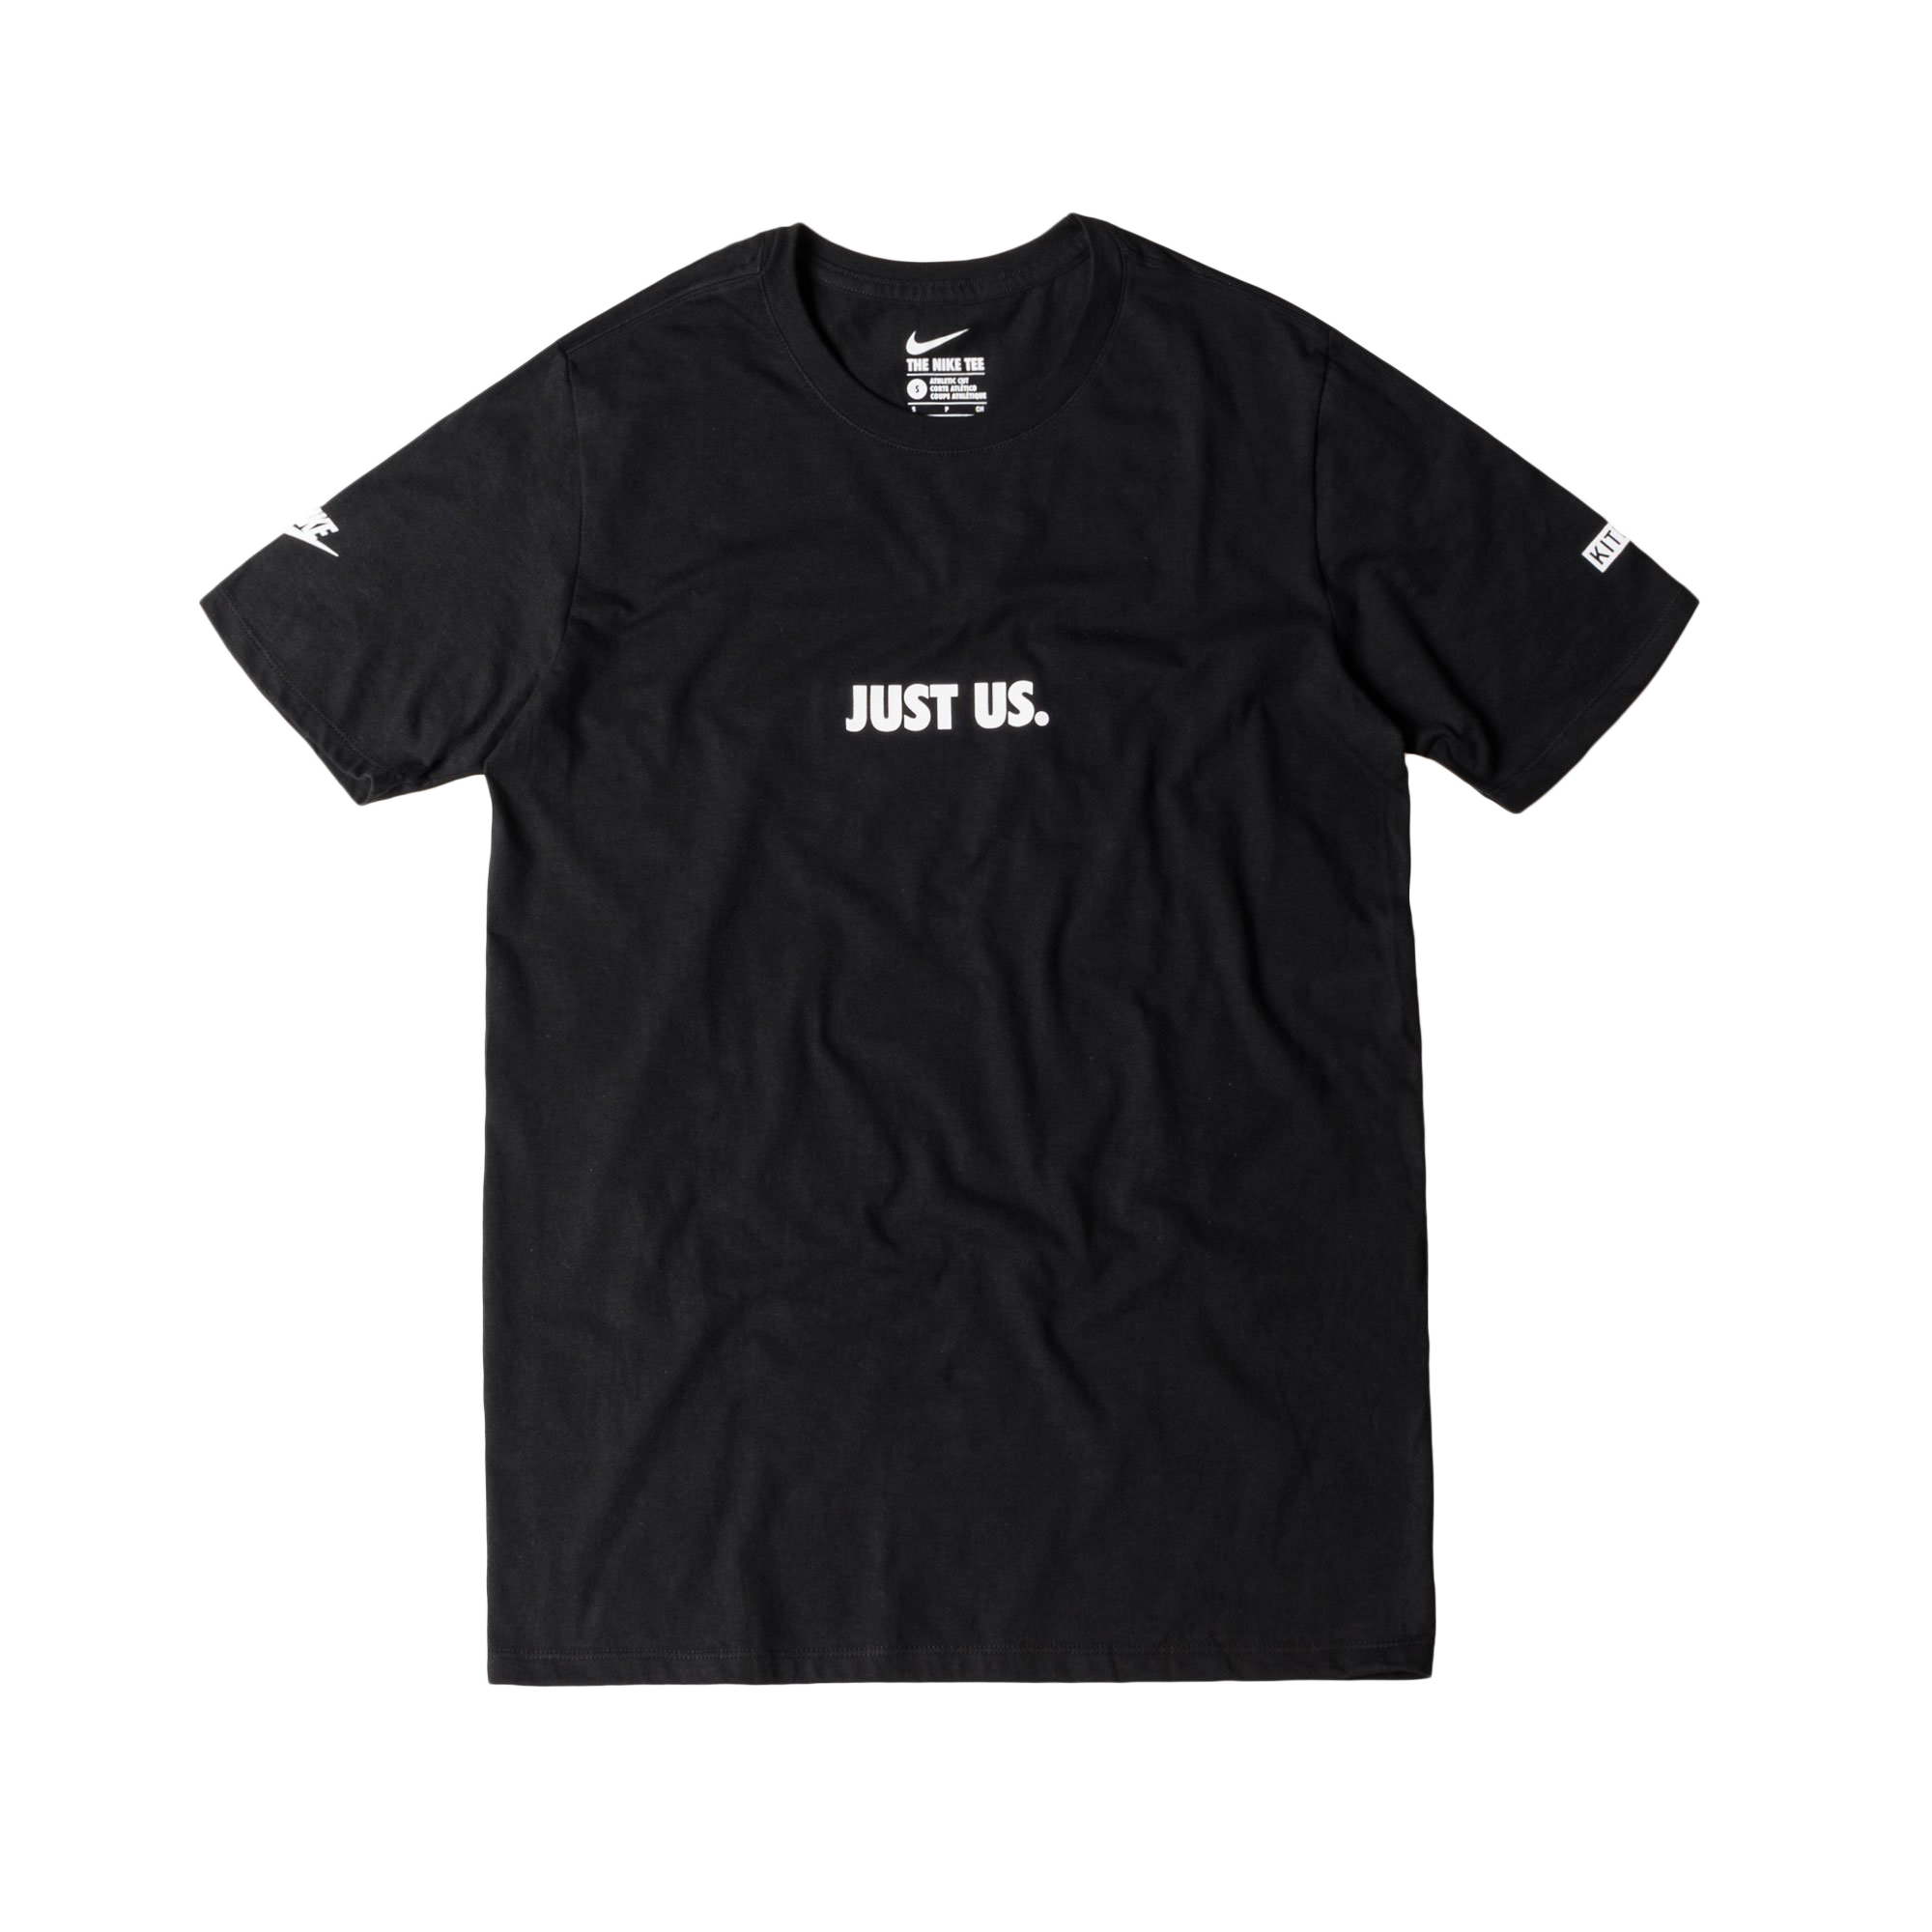 Kith Nike Tシャツ - Tシャツ/カットソー(半袖/袖なし)